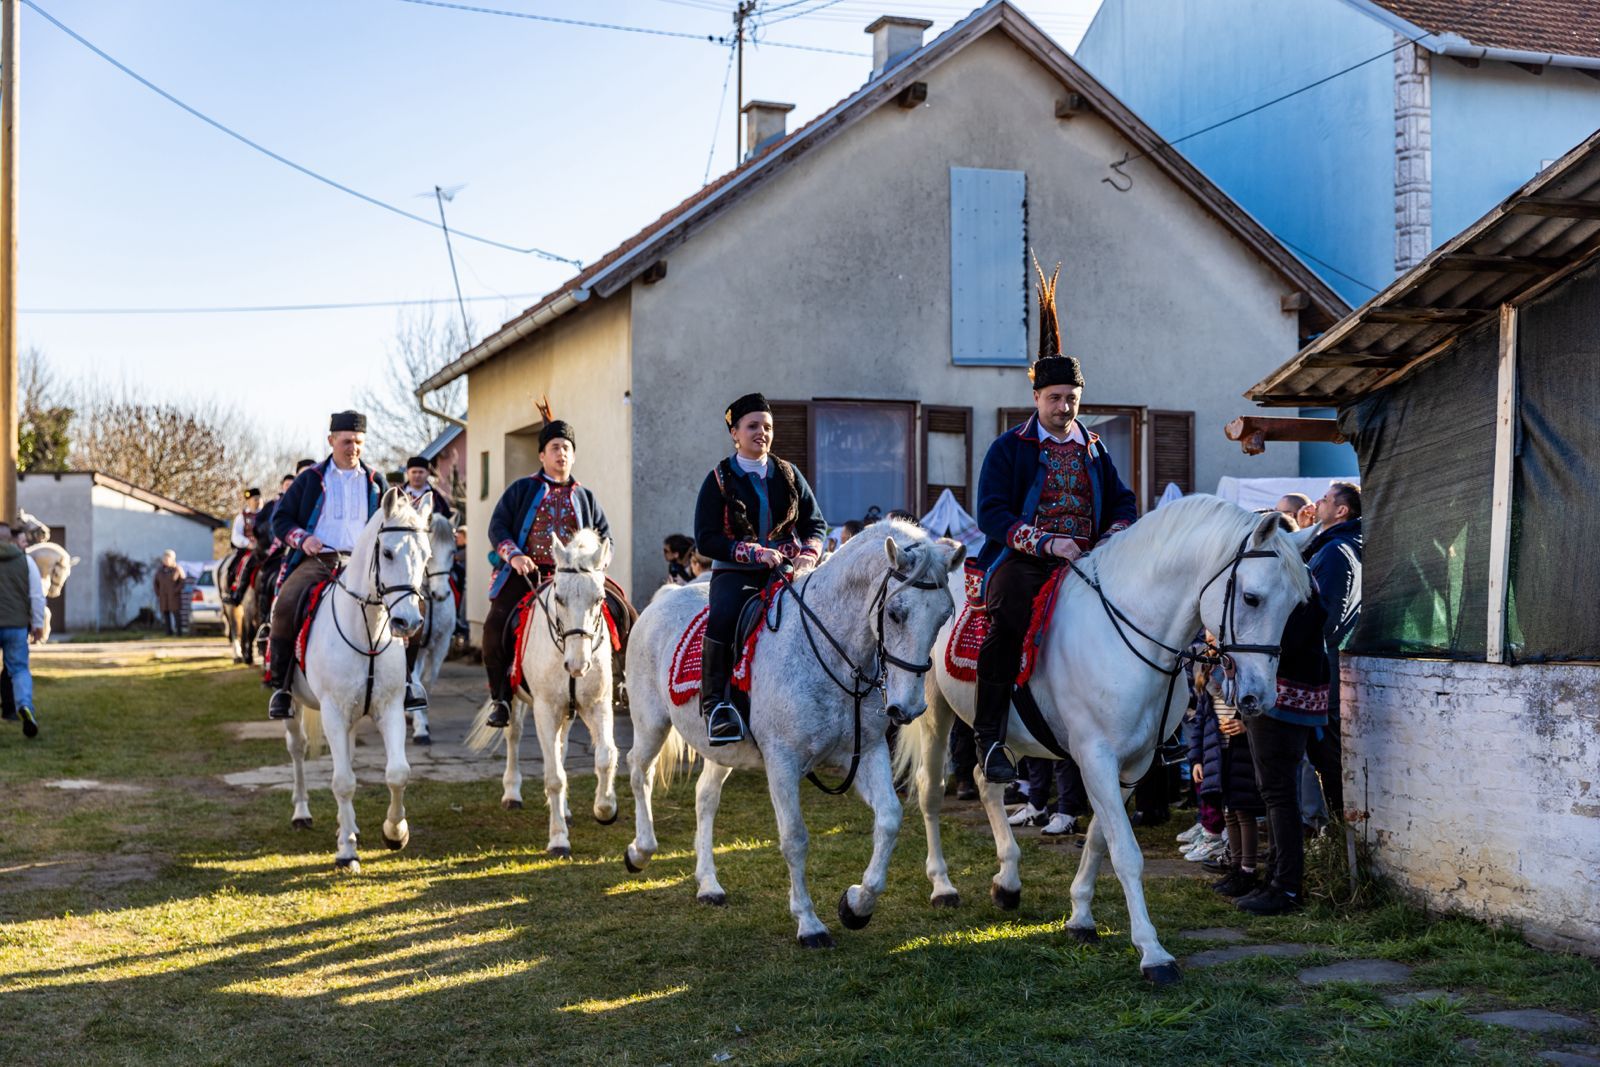 The 200-year-old Croatian tradition of Pokladno Jahanje comes alive in Osijek